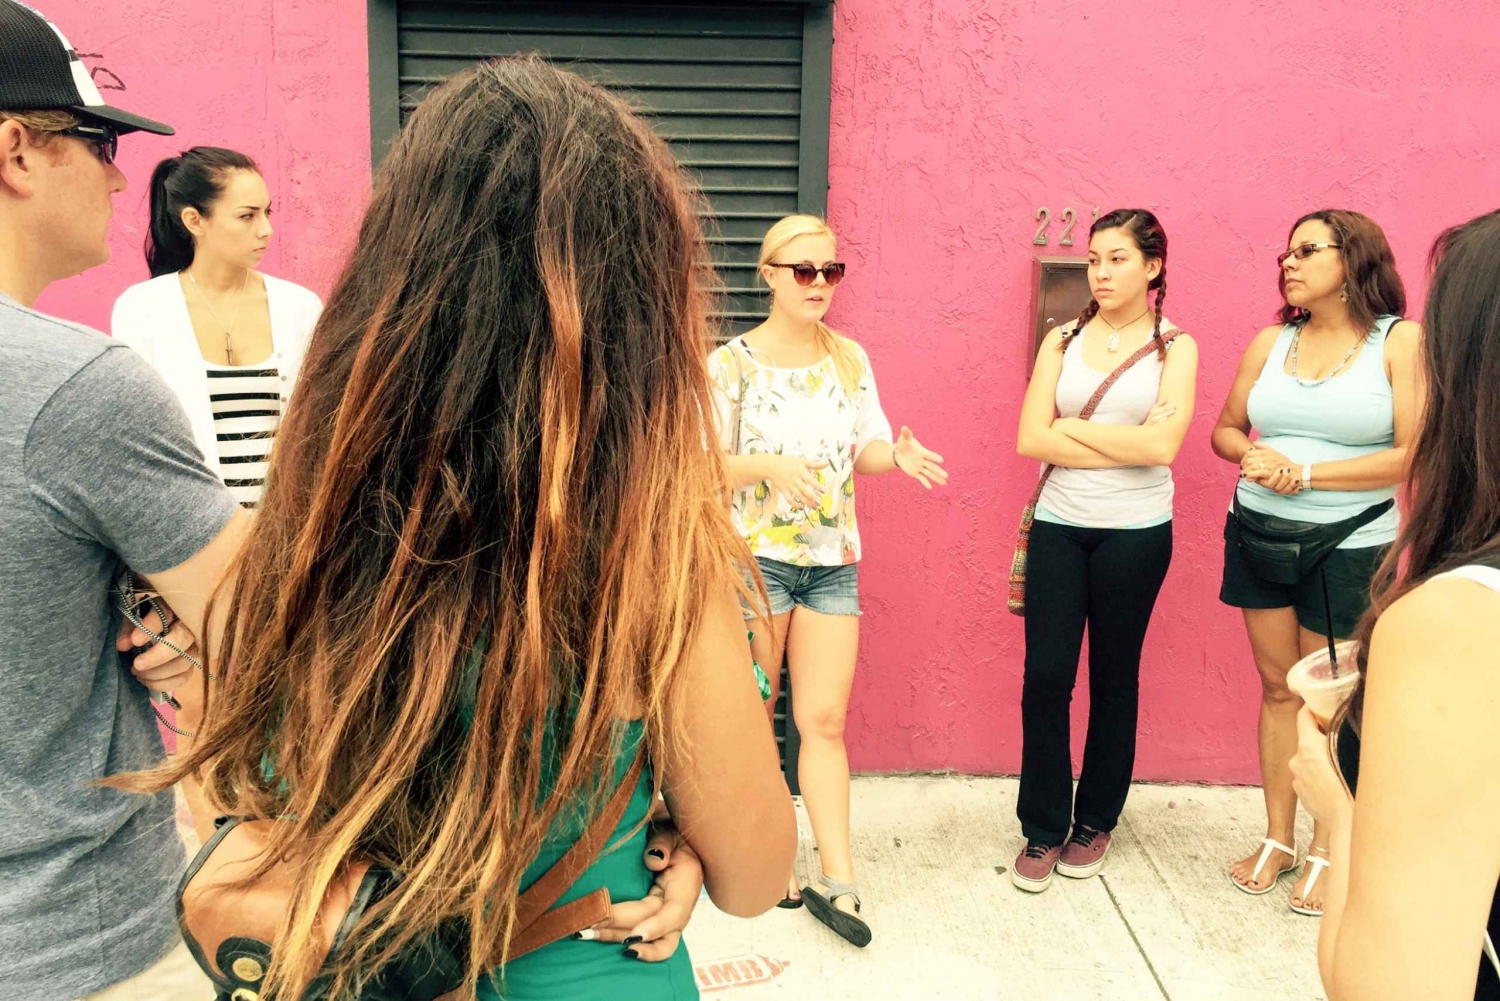 Miami: Wynwood Arts District Walking Tour